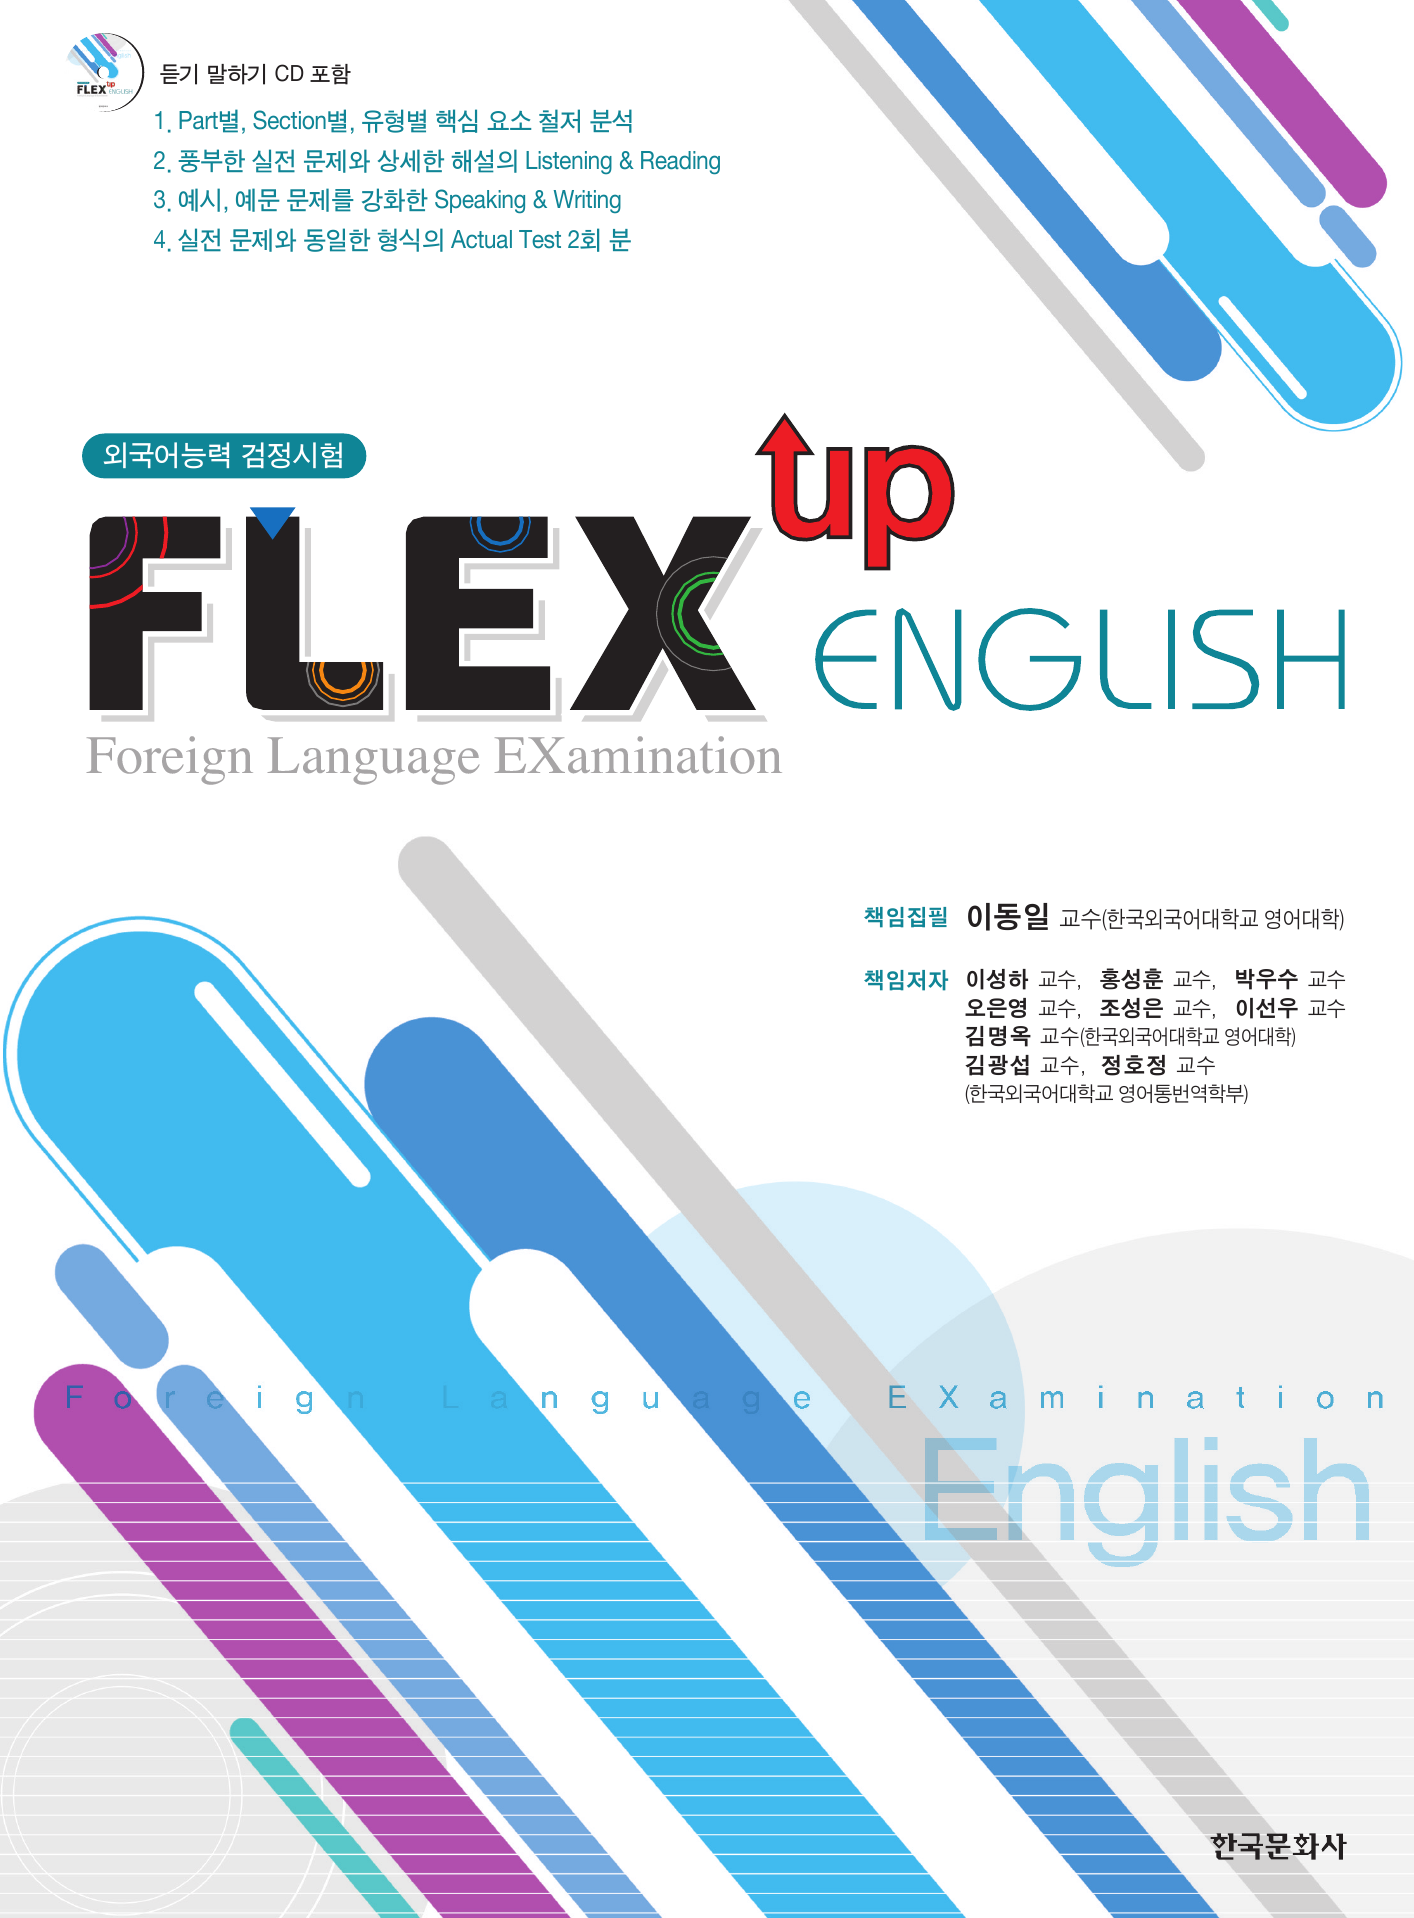 FLEX UP ENGLISH